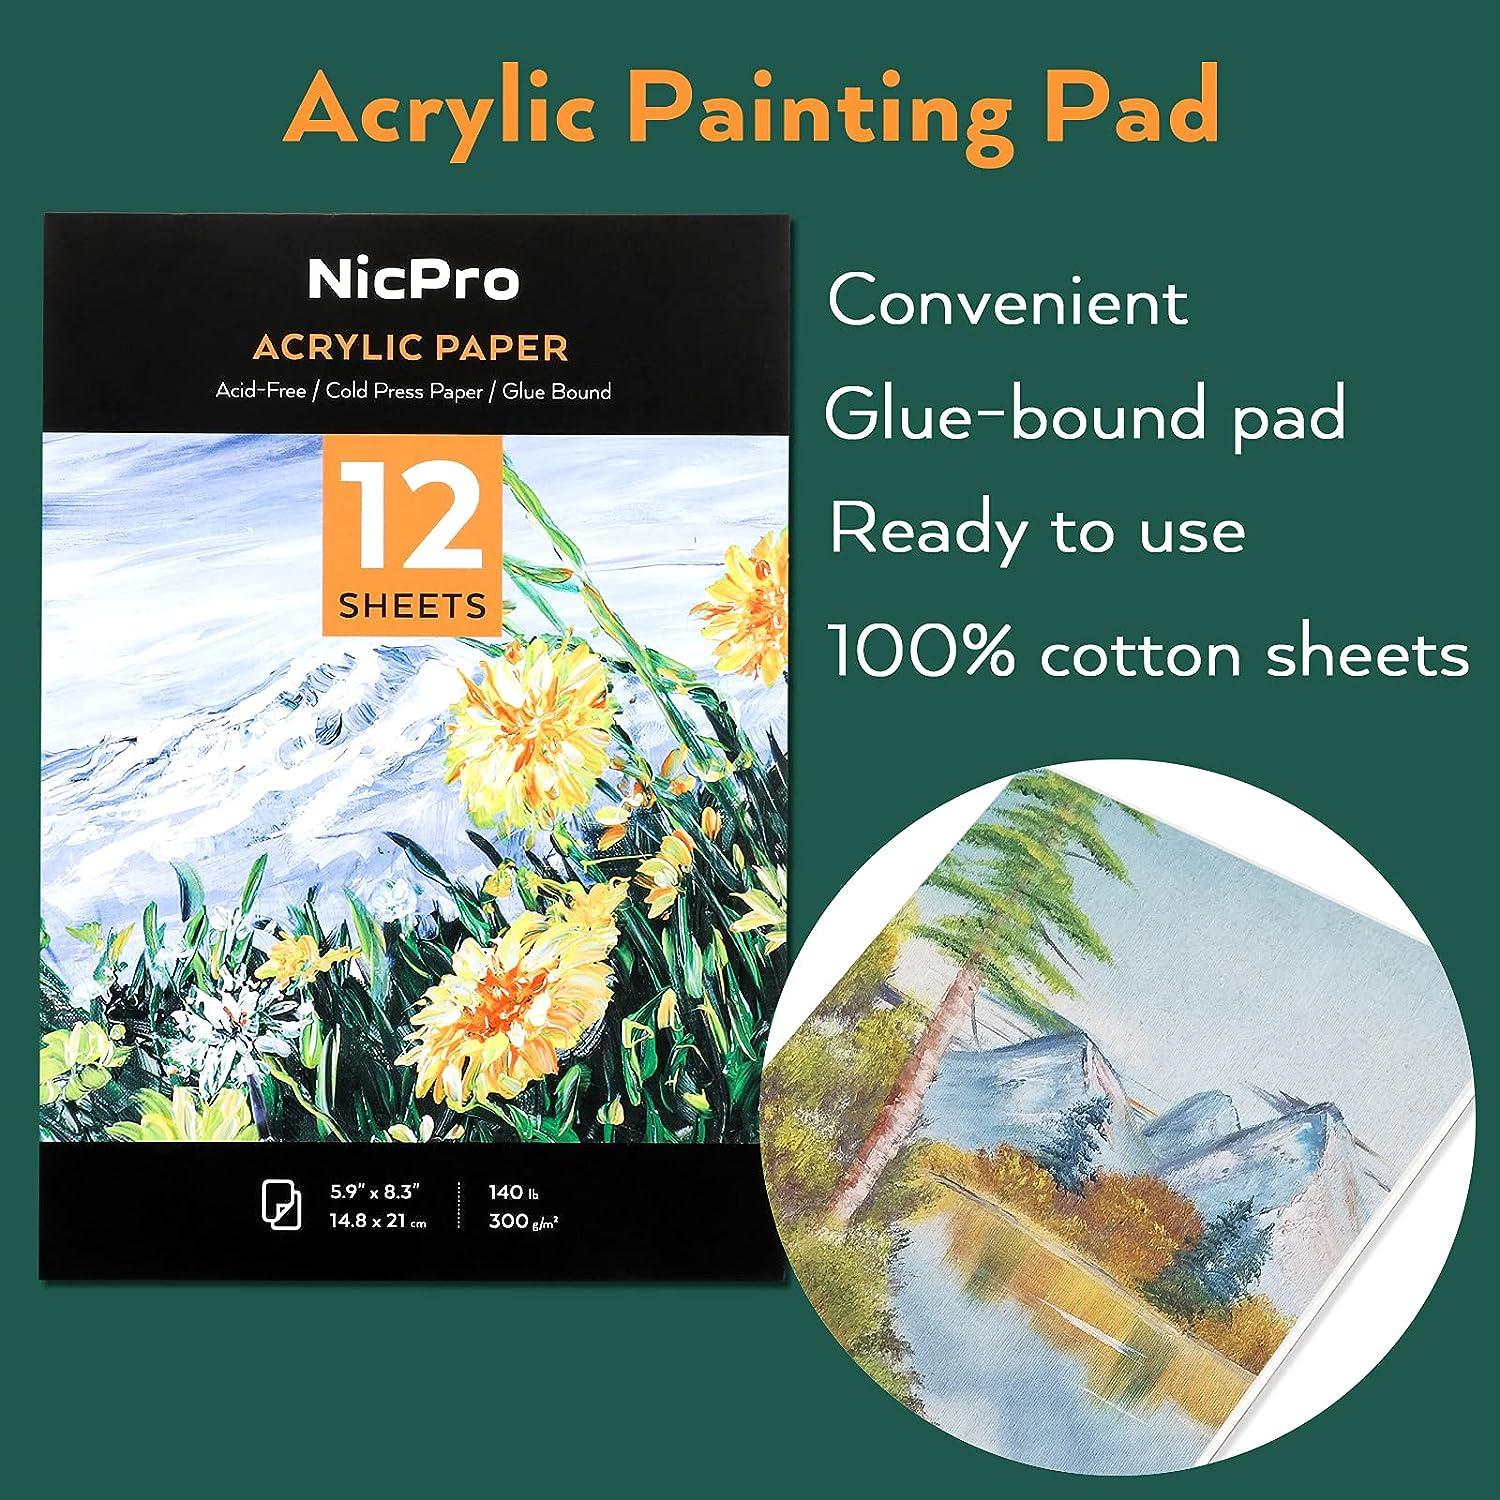 Nicpro Acrylic Paint Set Kid & Adult Art Painting Party Kit 2 Set